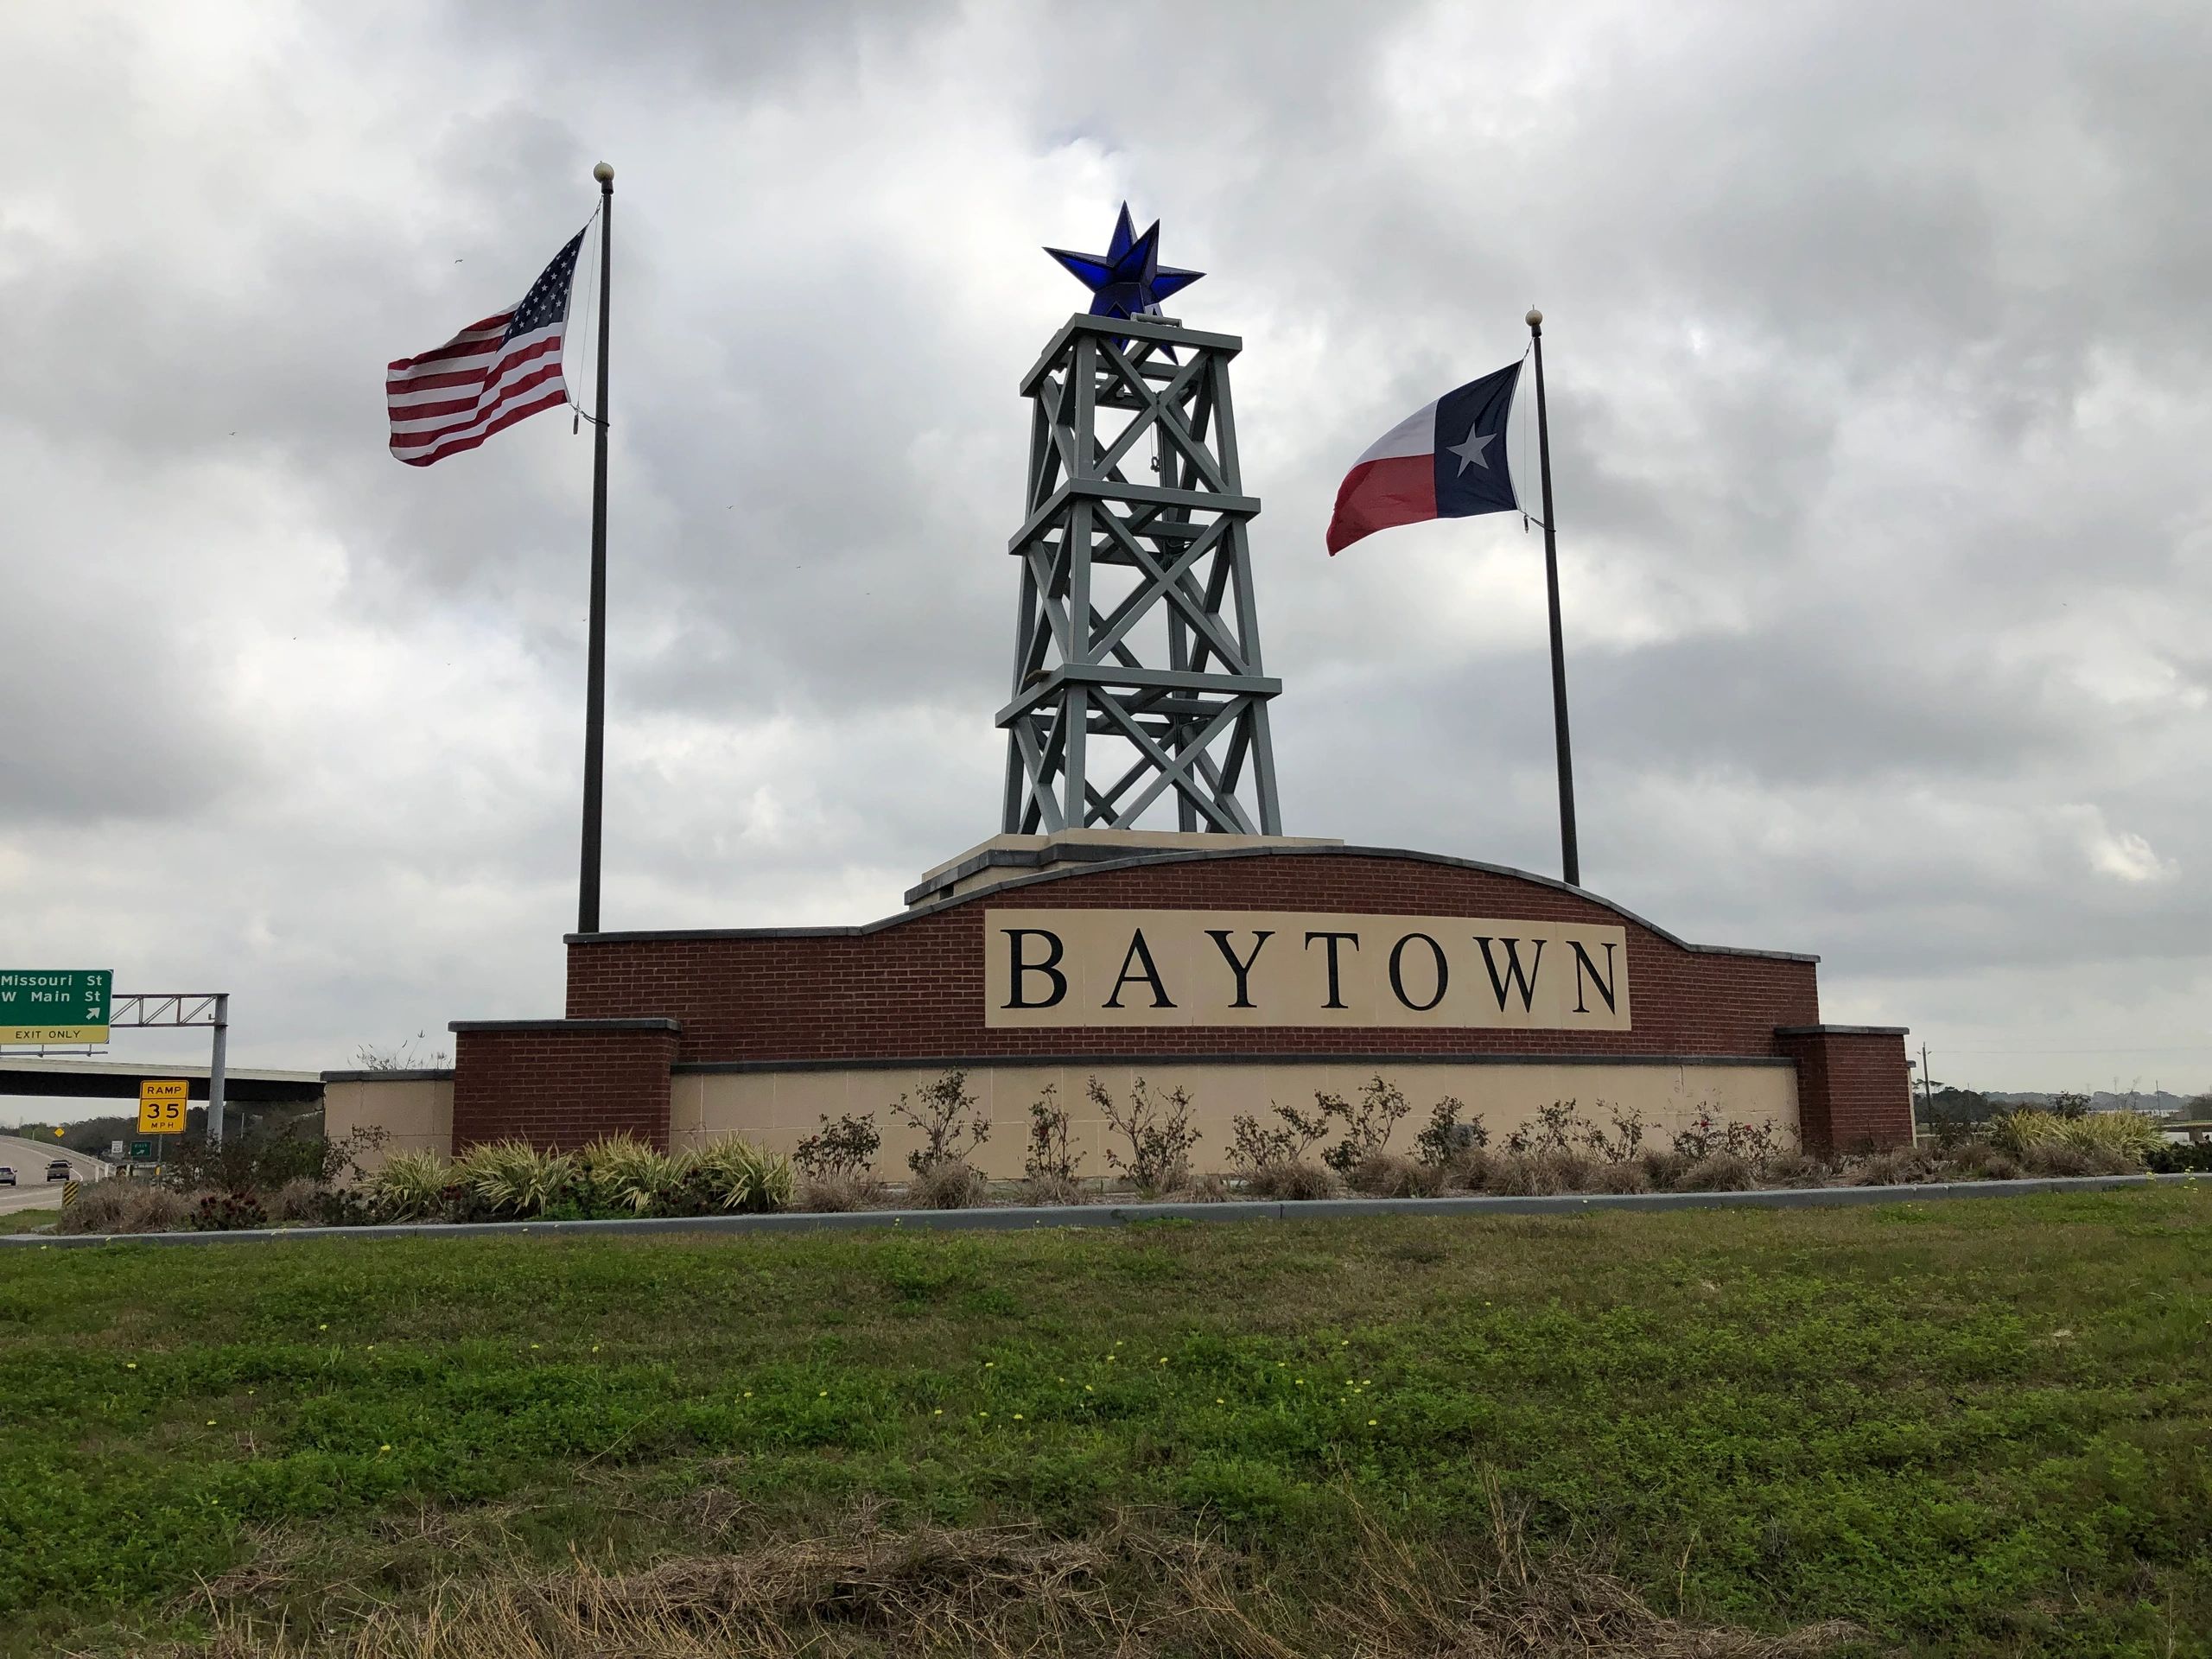 Baytown, Texas